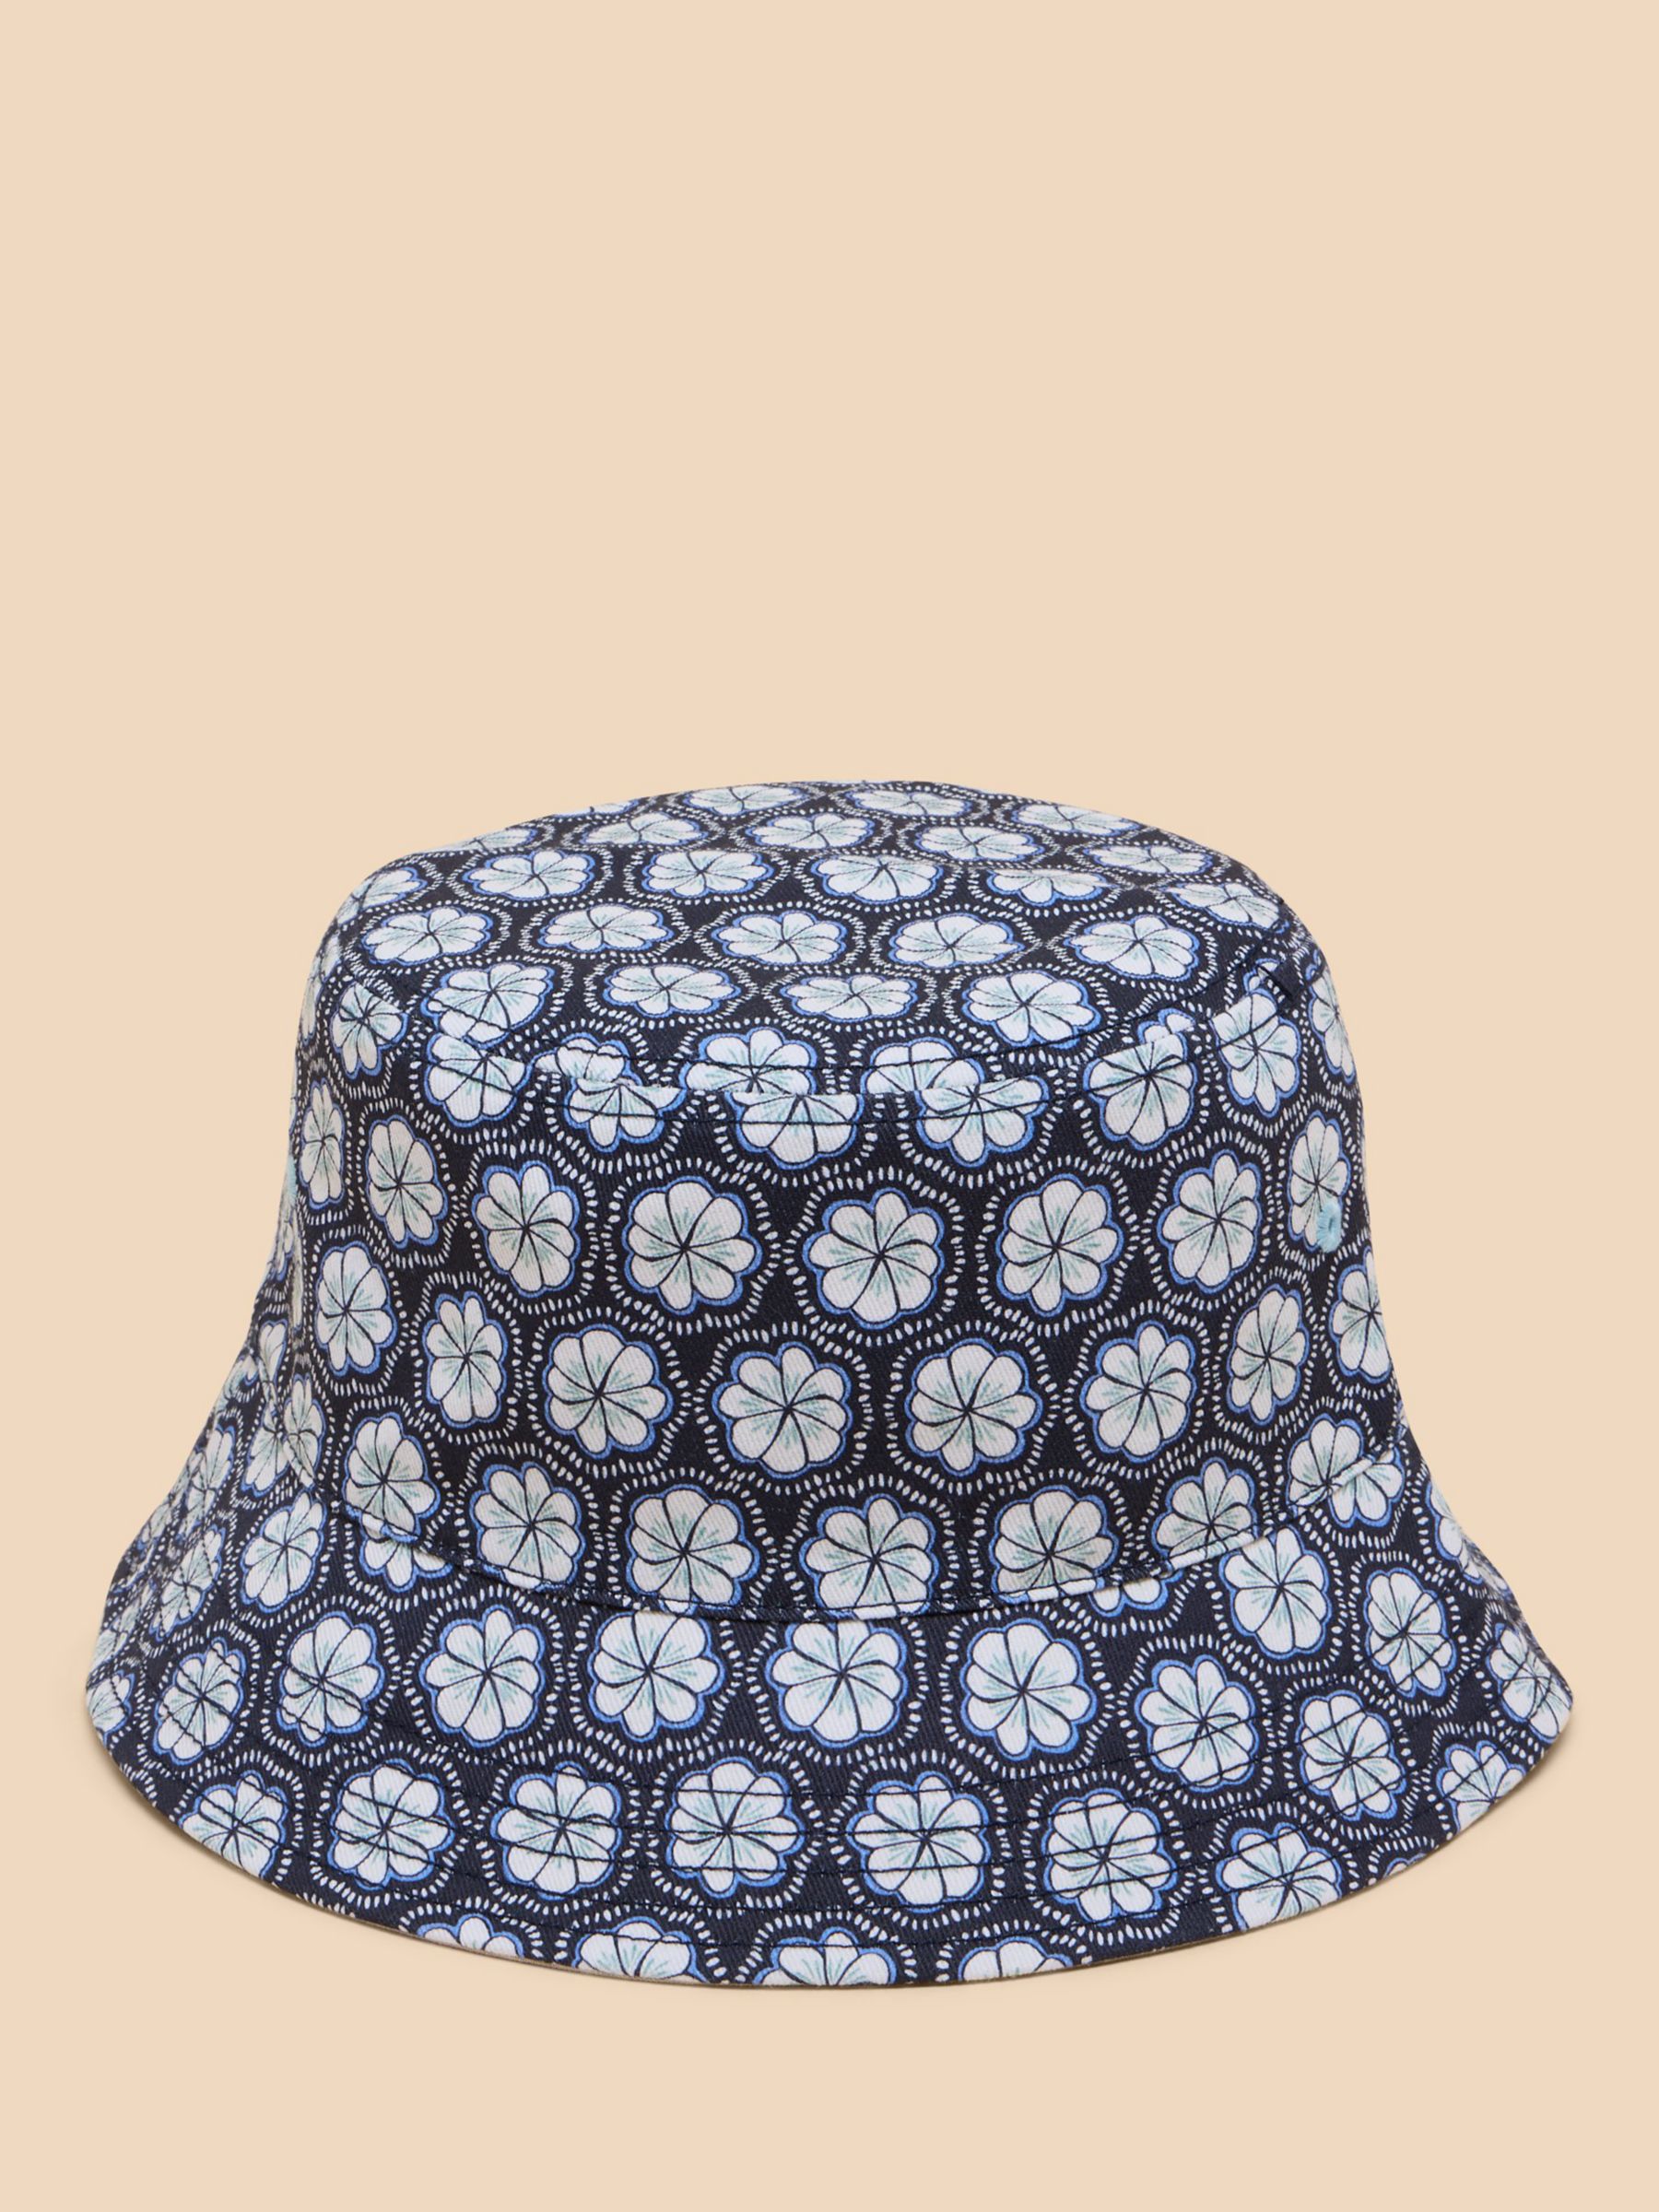 White Stuff Reversible Bucket Hat, Navy/Beige, One Size